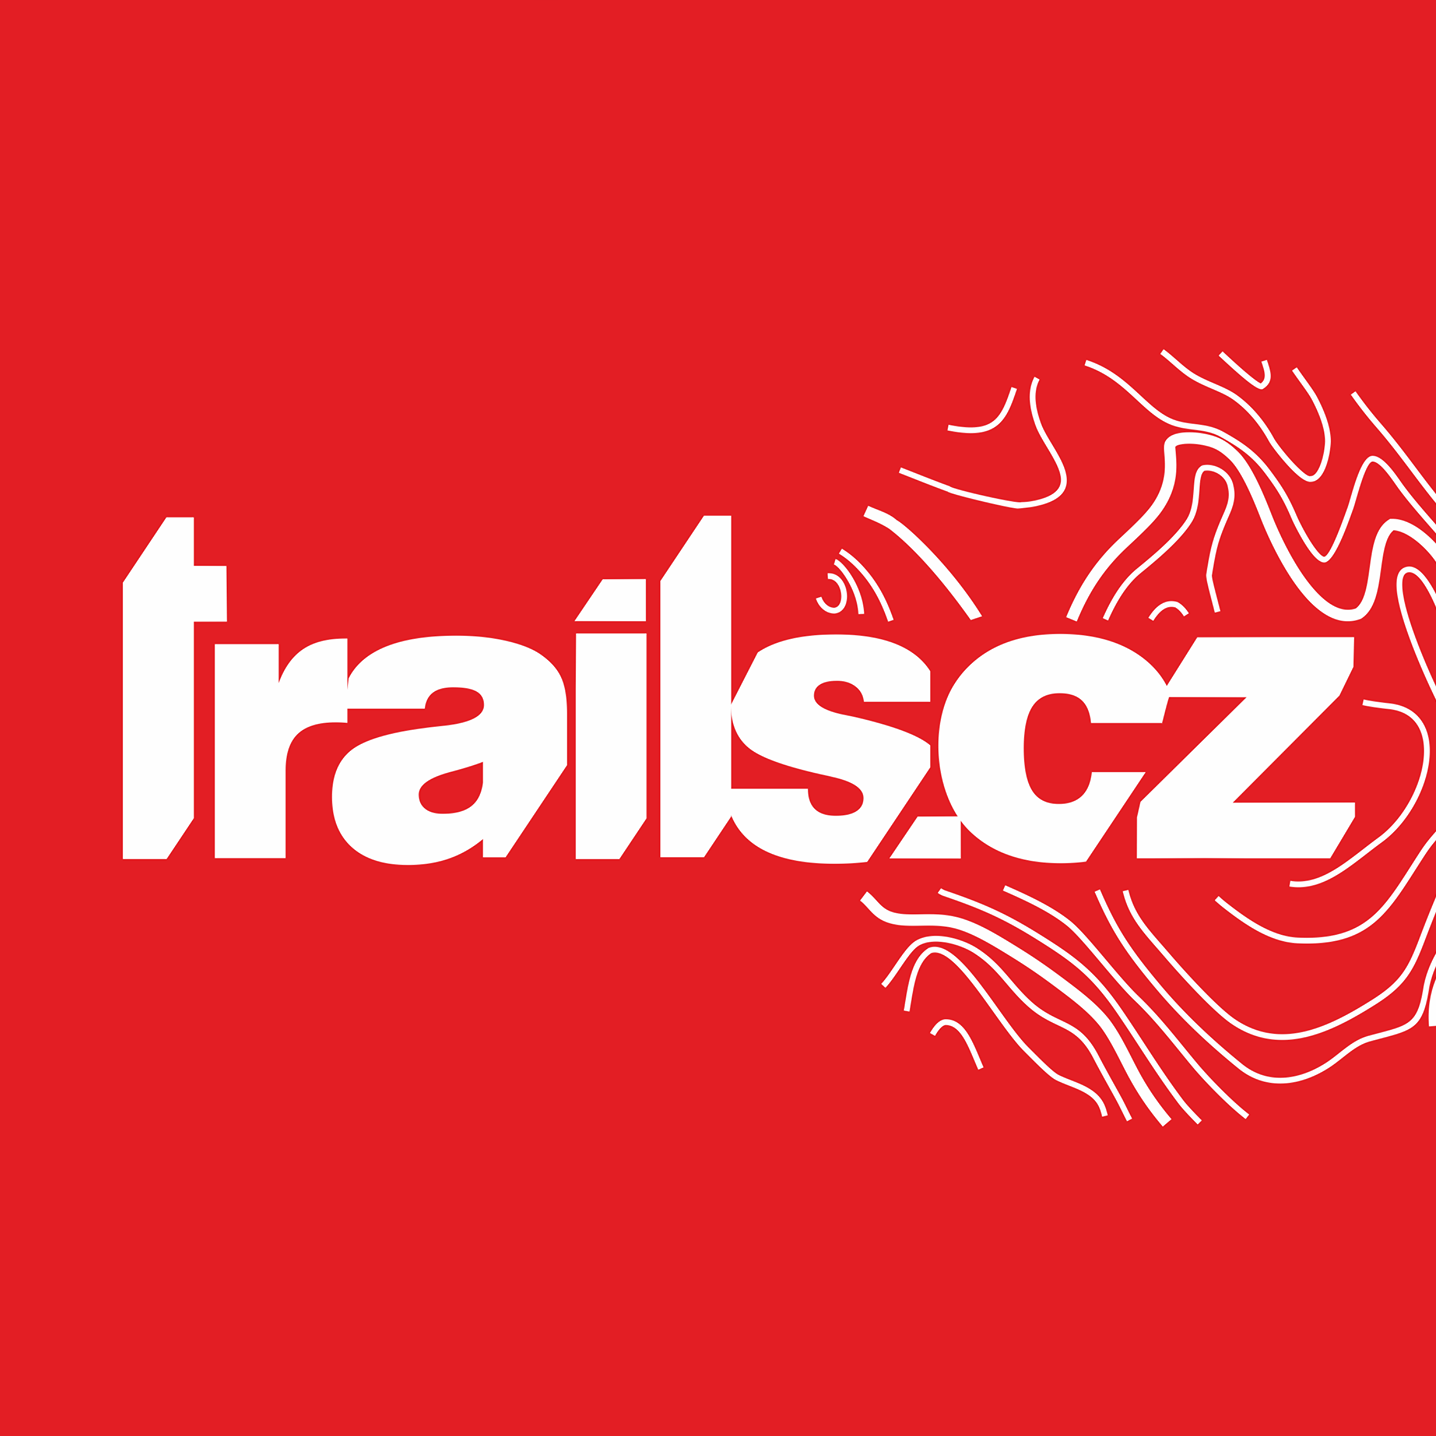 Trails.cz